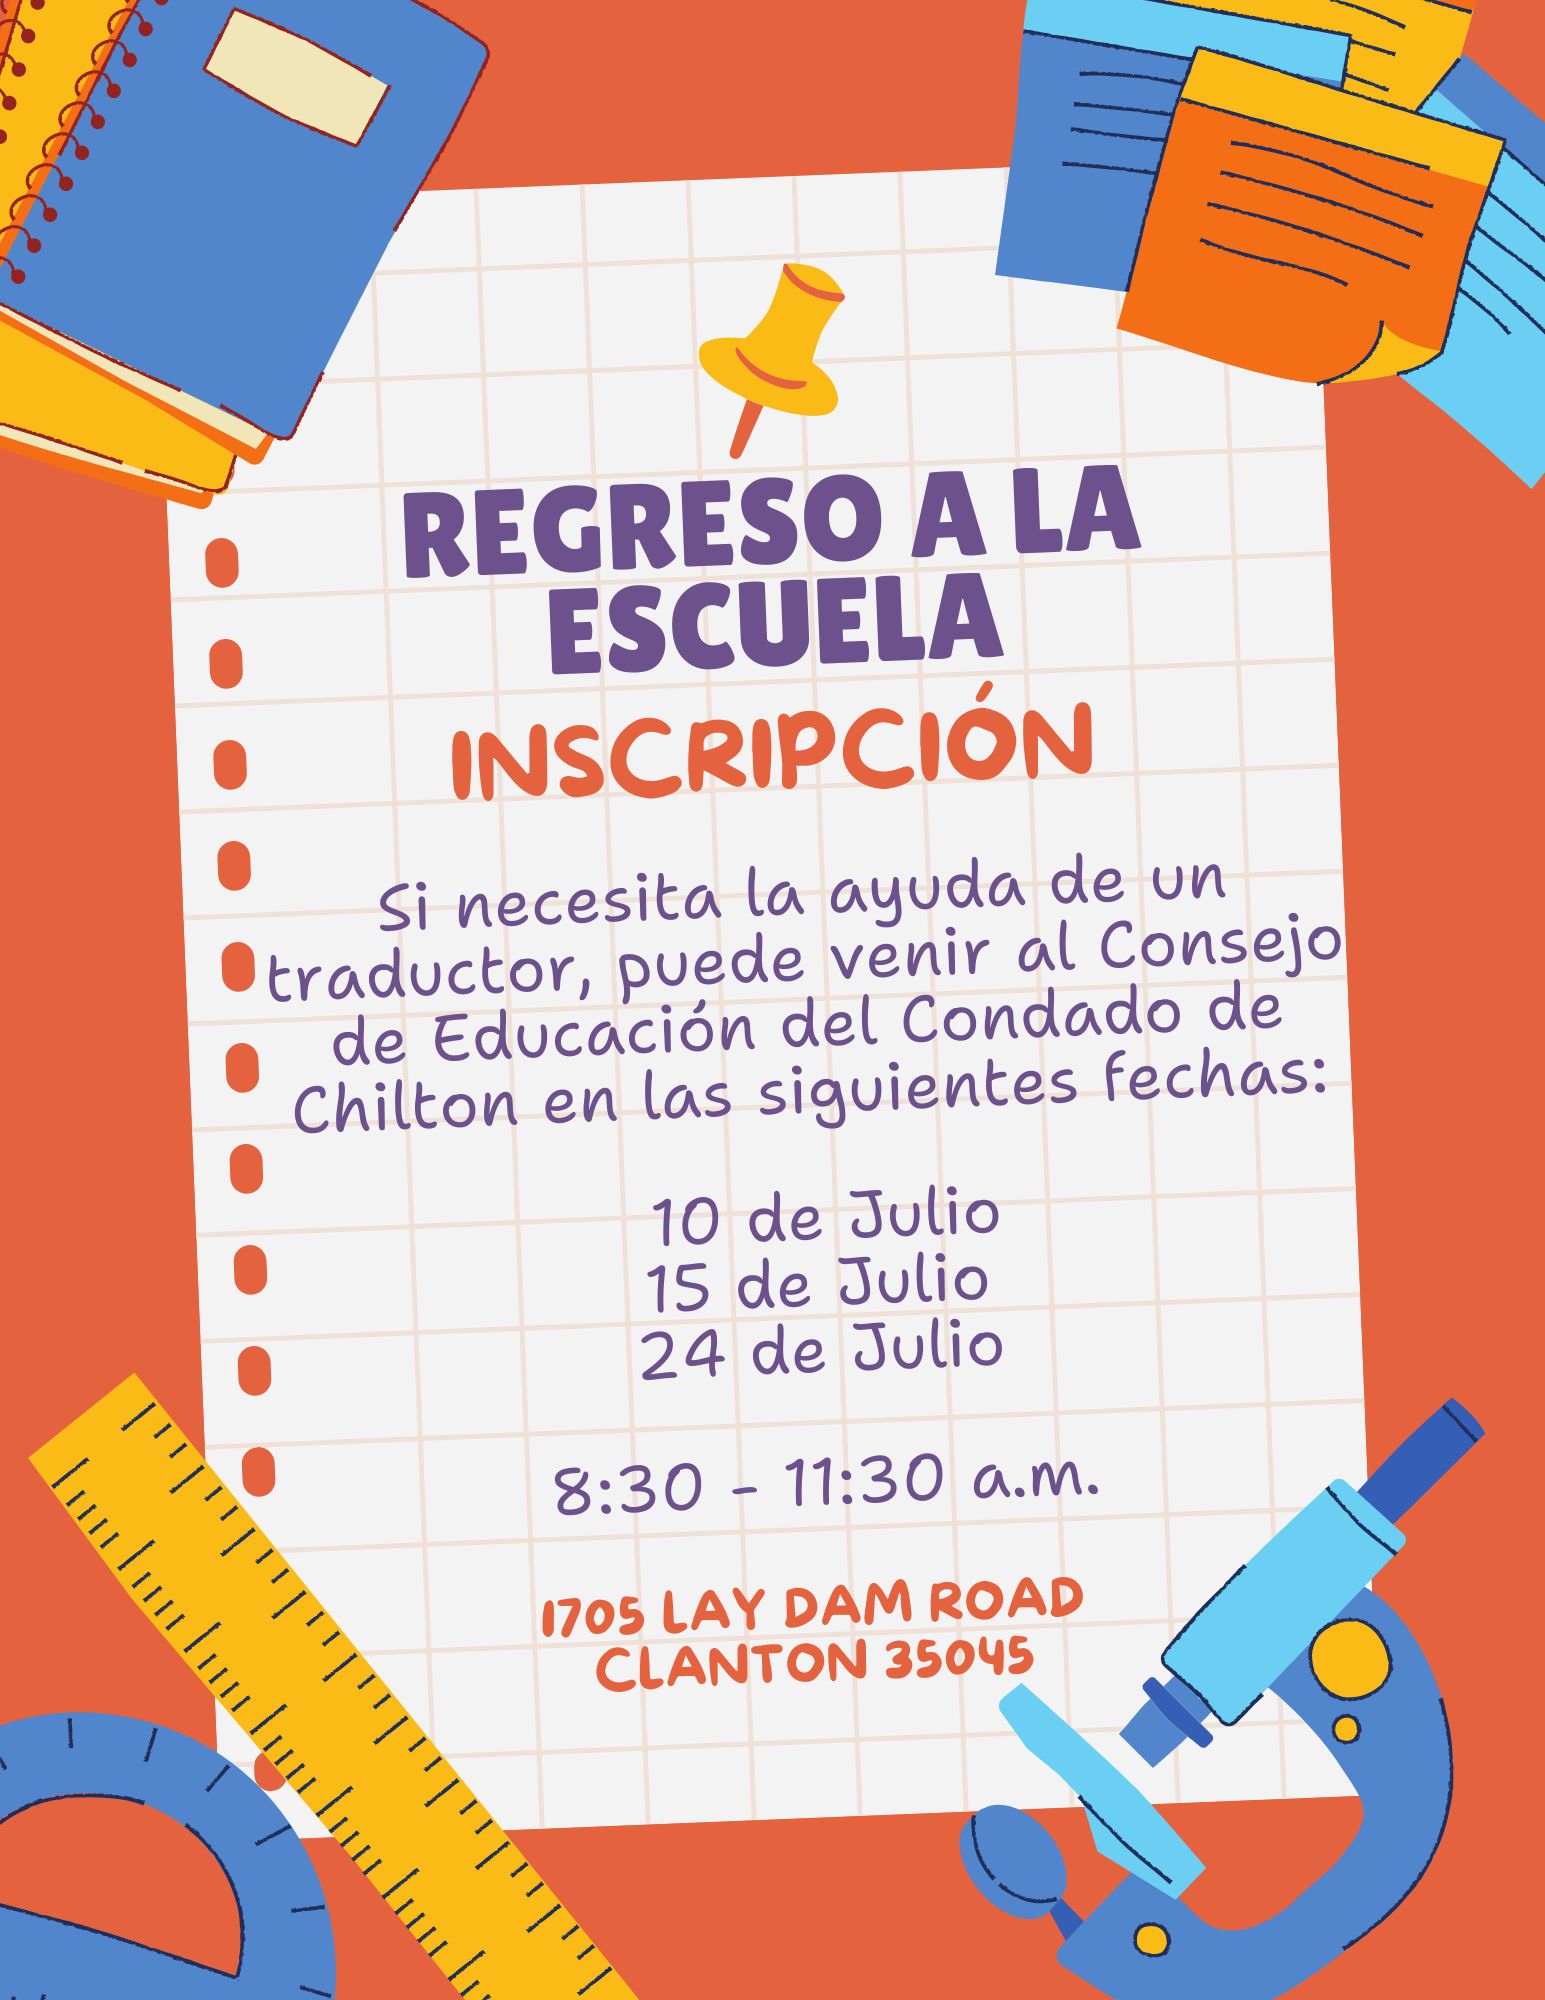 Registration flyer in Spanish